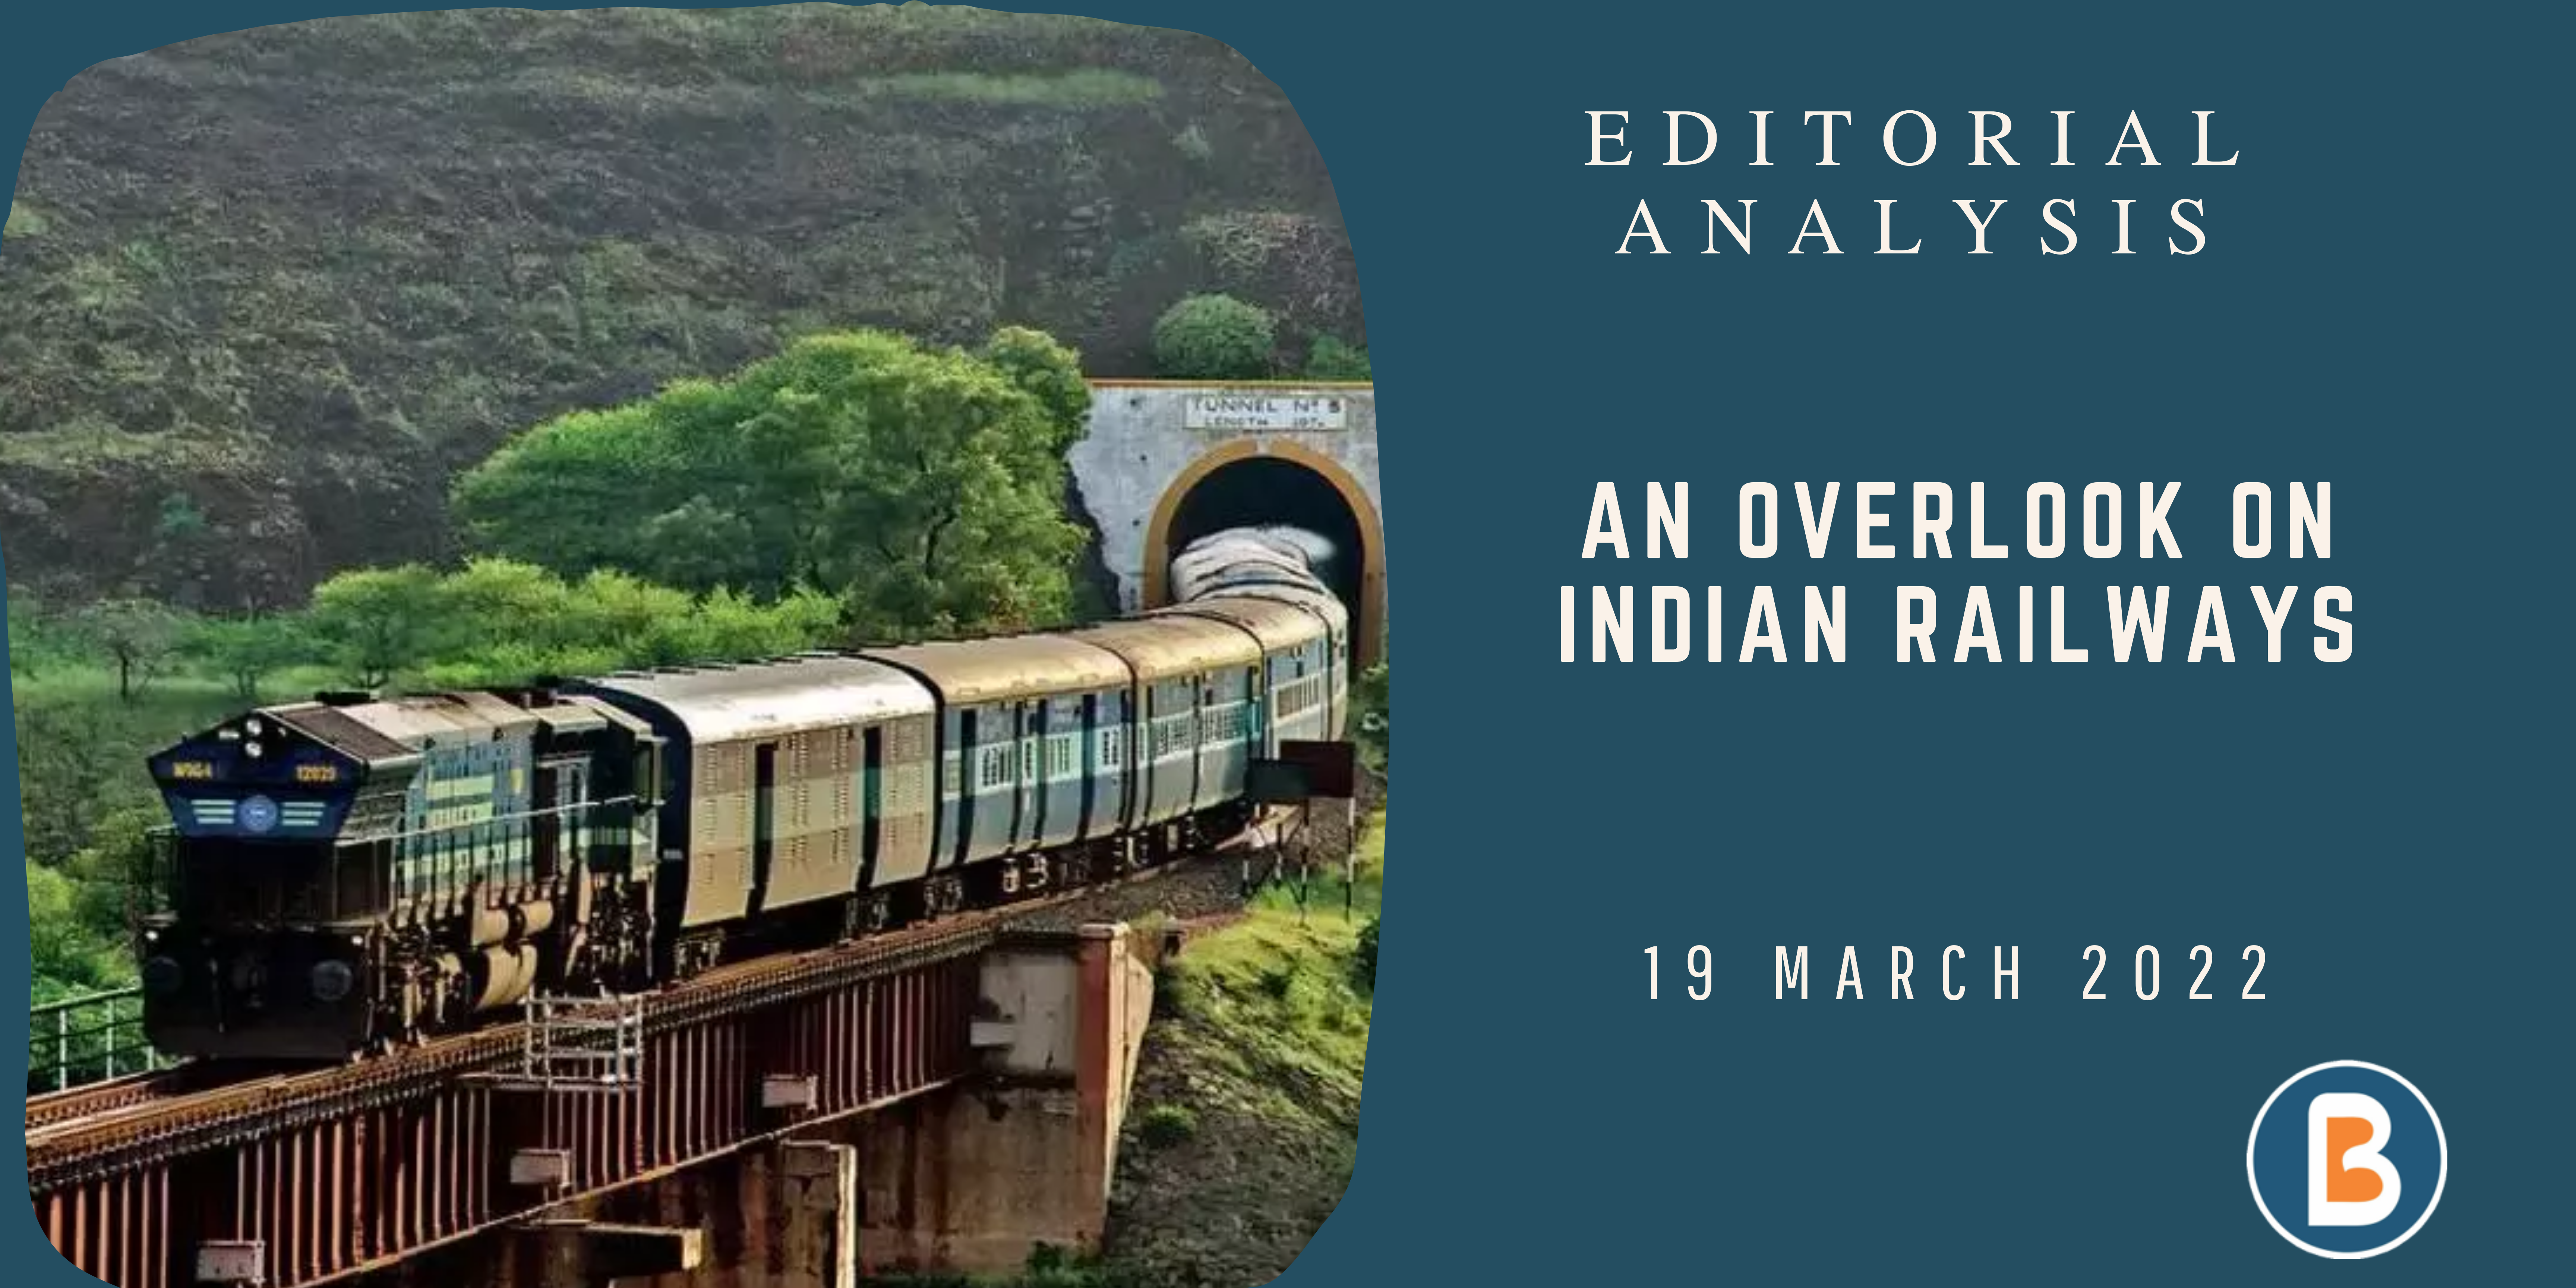 Editorial Analysis for IAS - An Overlook on Indian Railways